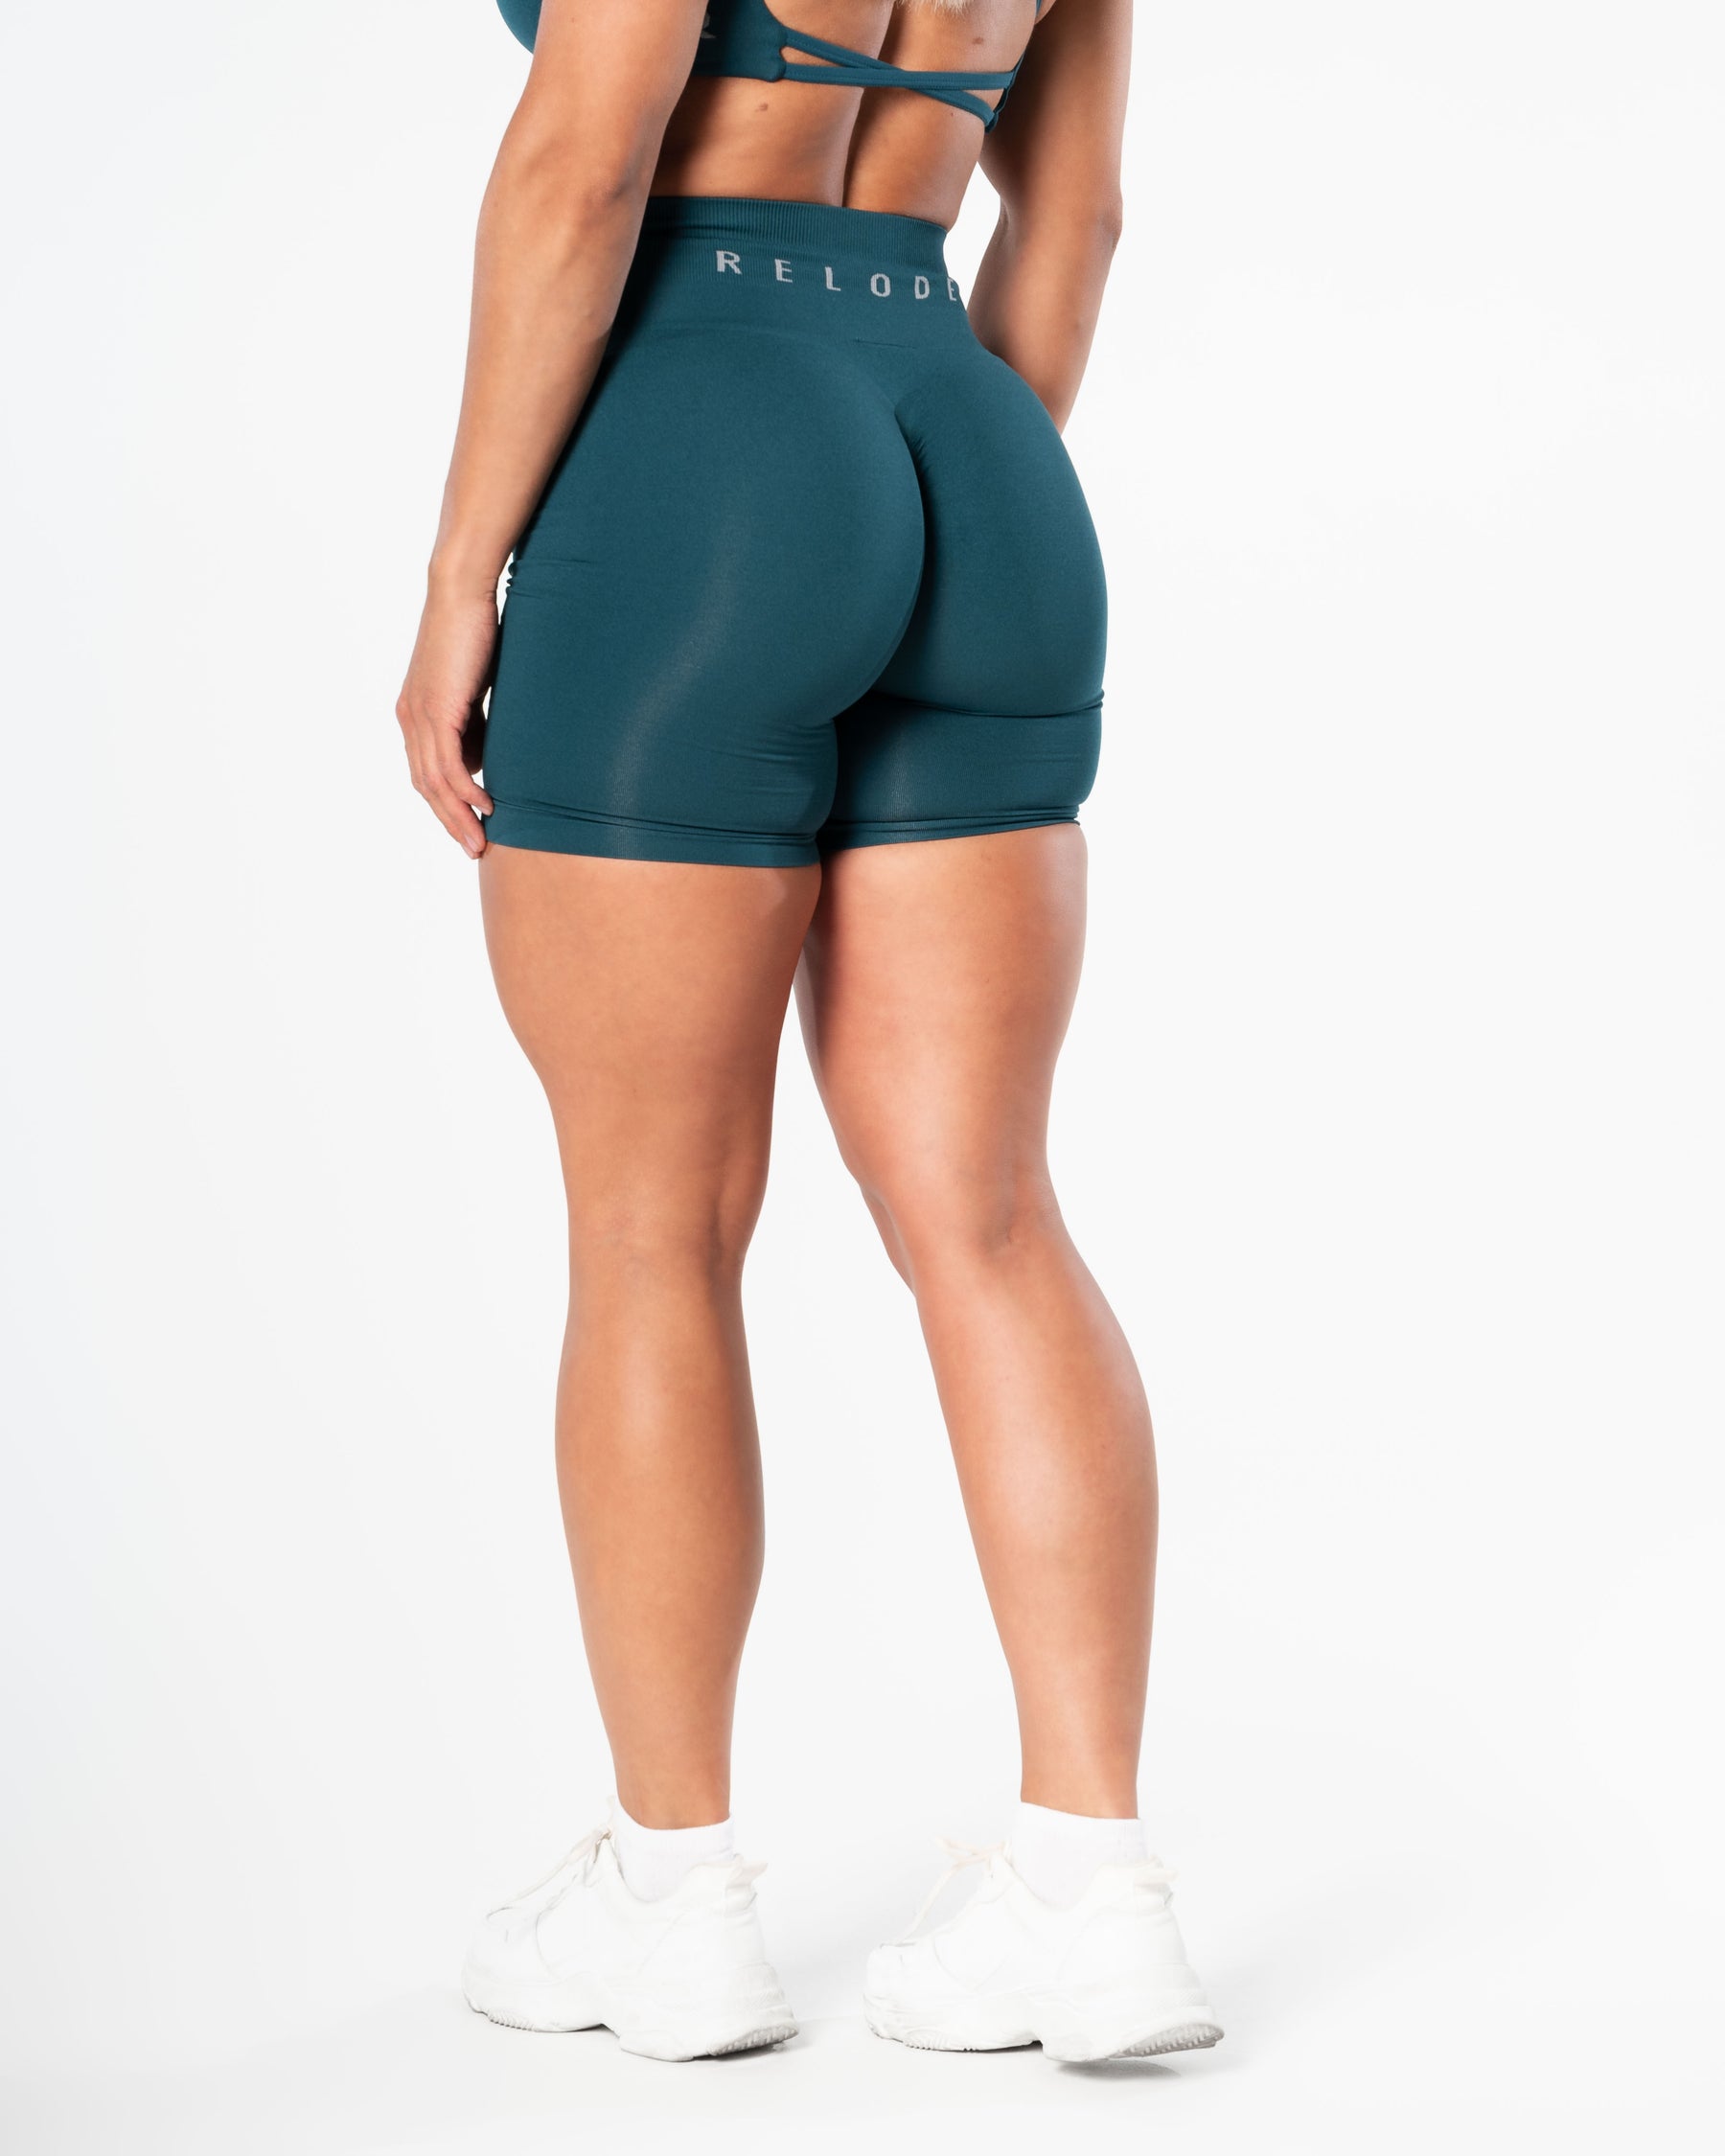 Prime Scrunch Shorts - Teal green